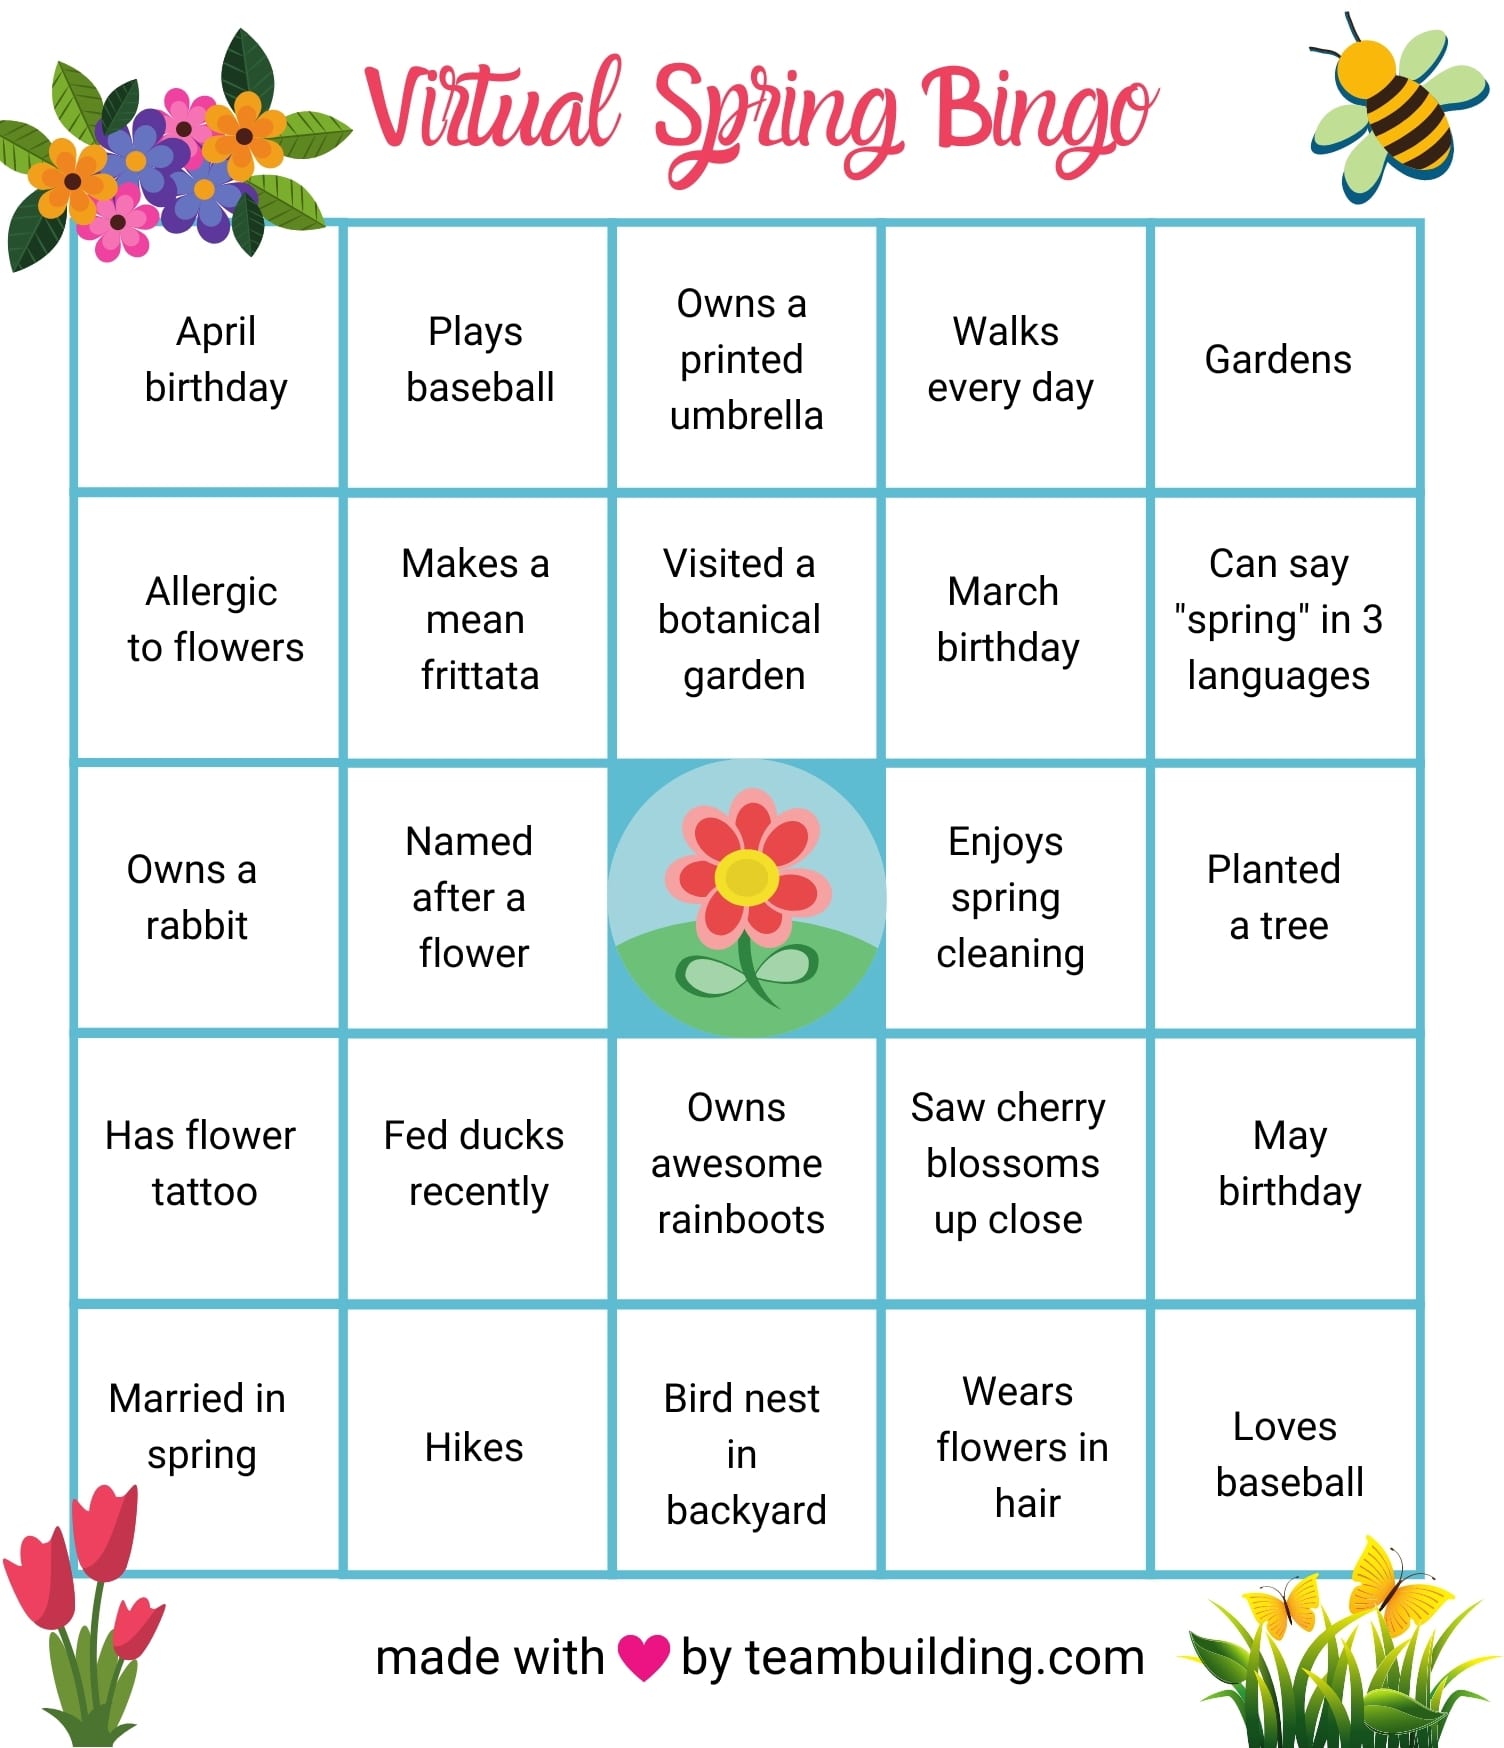 Virtual Spring Bingo